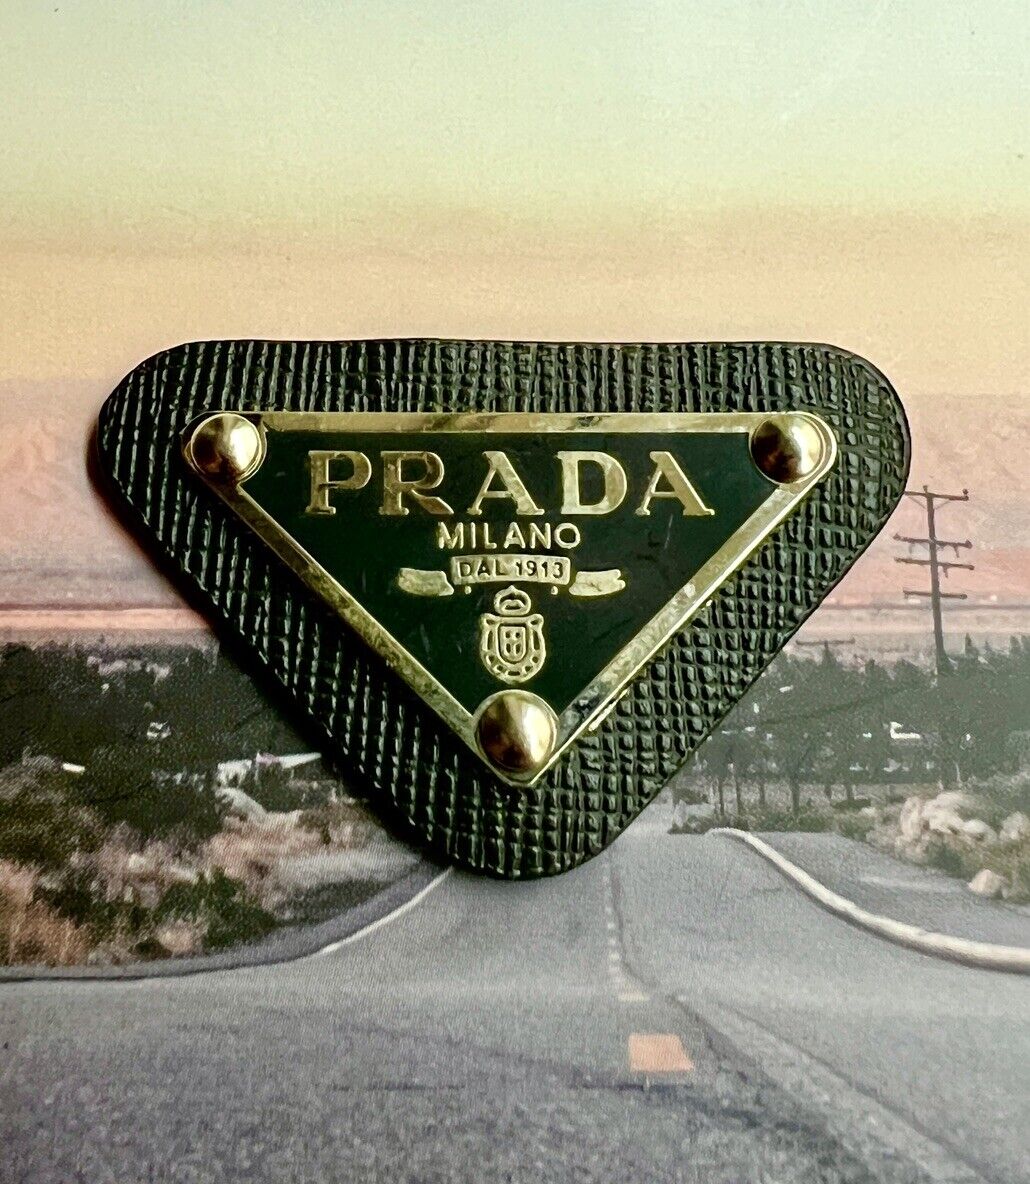 1 Prada Milano Logo little Button Plate Metal Emblem Triangle Plate Vintage